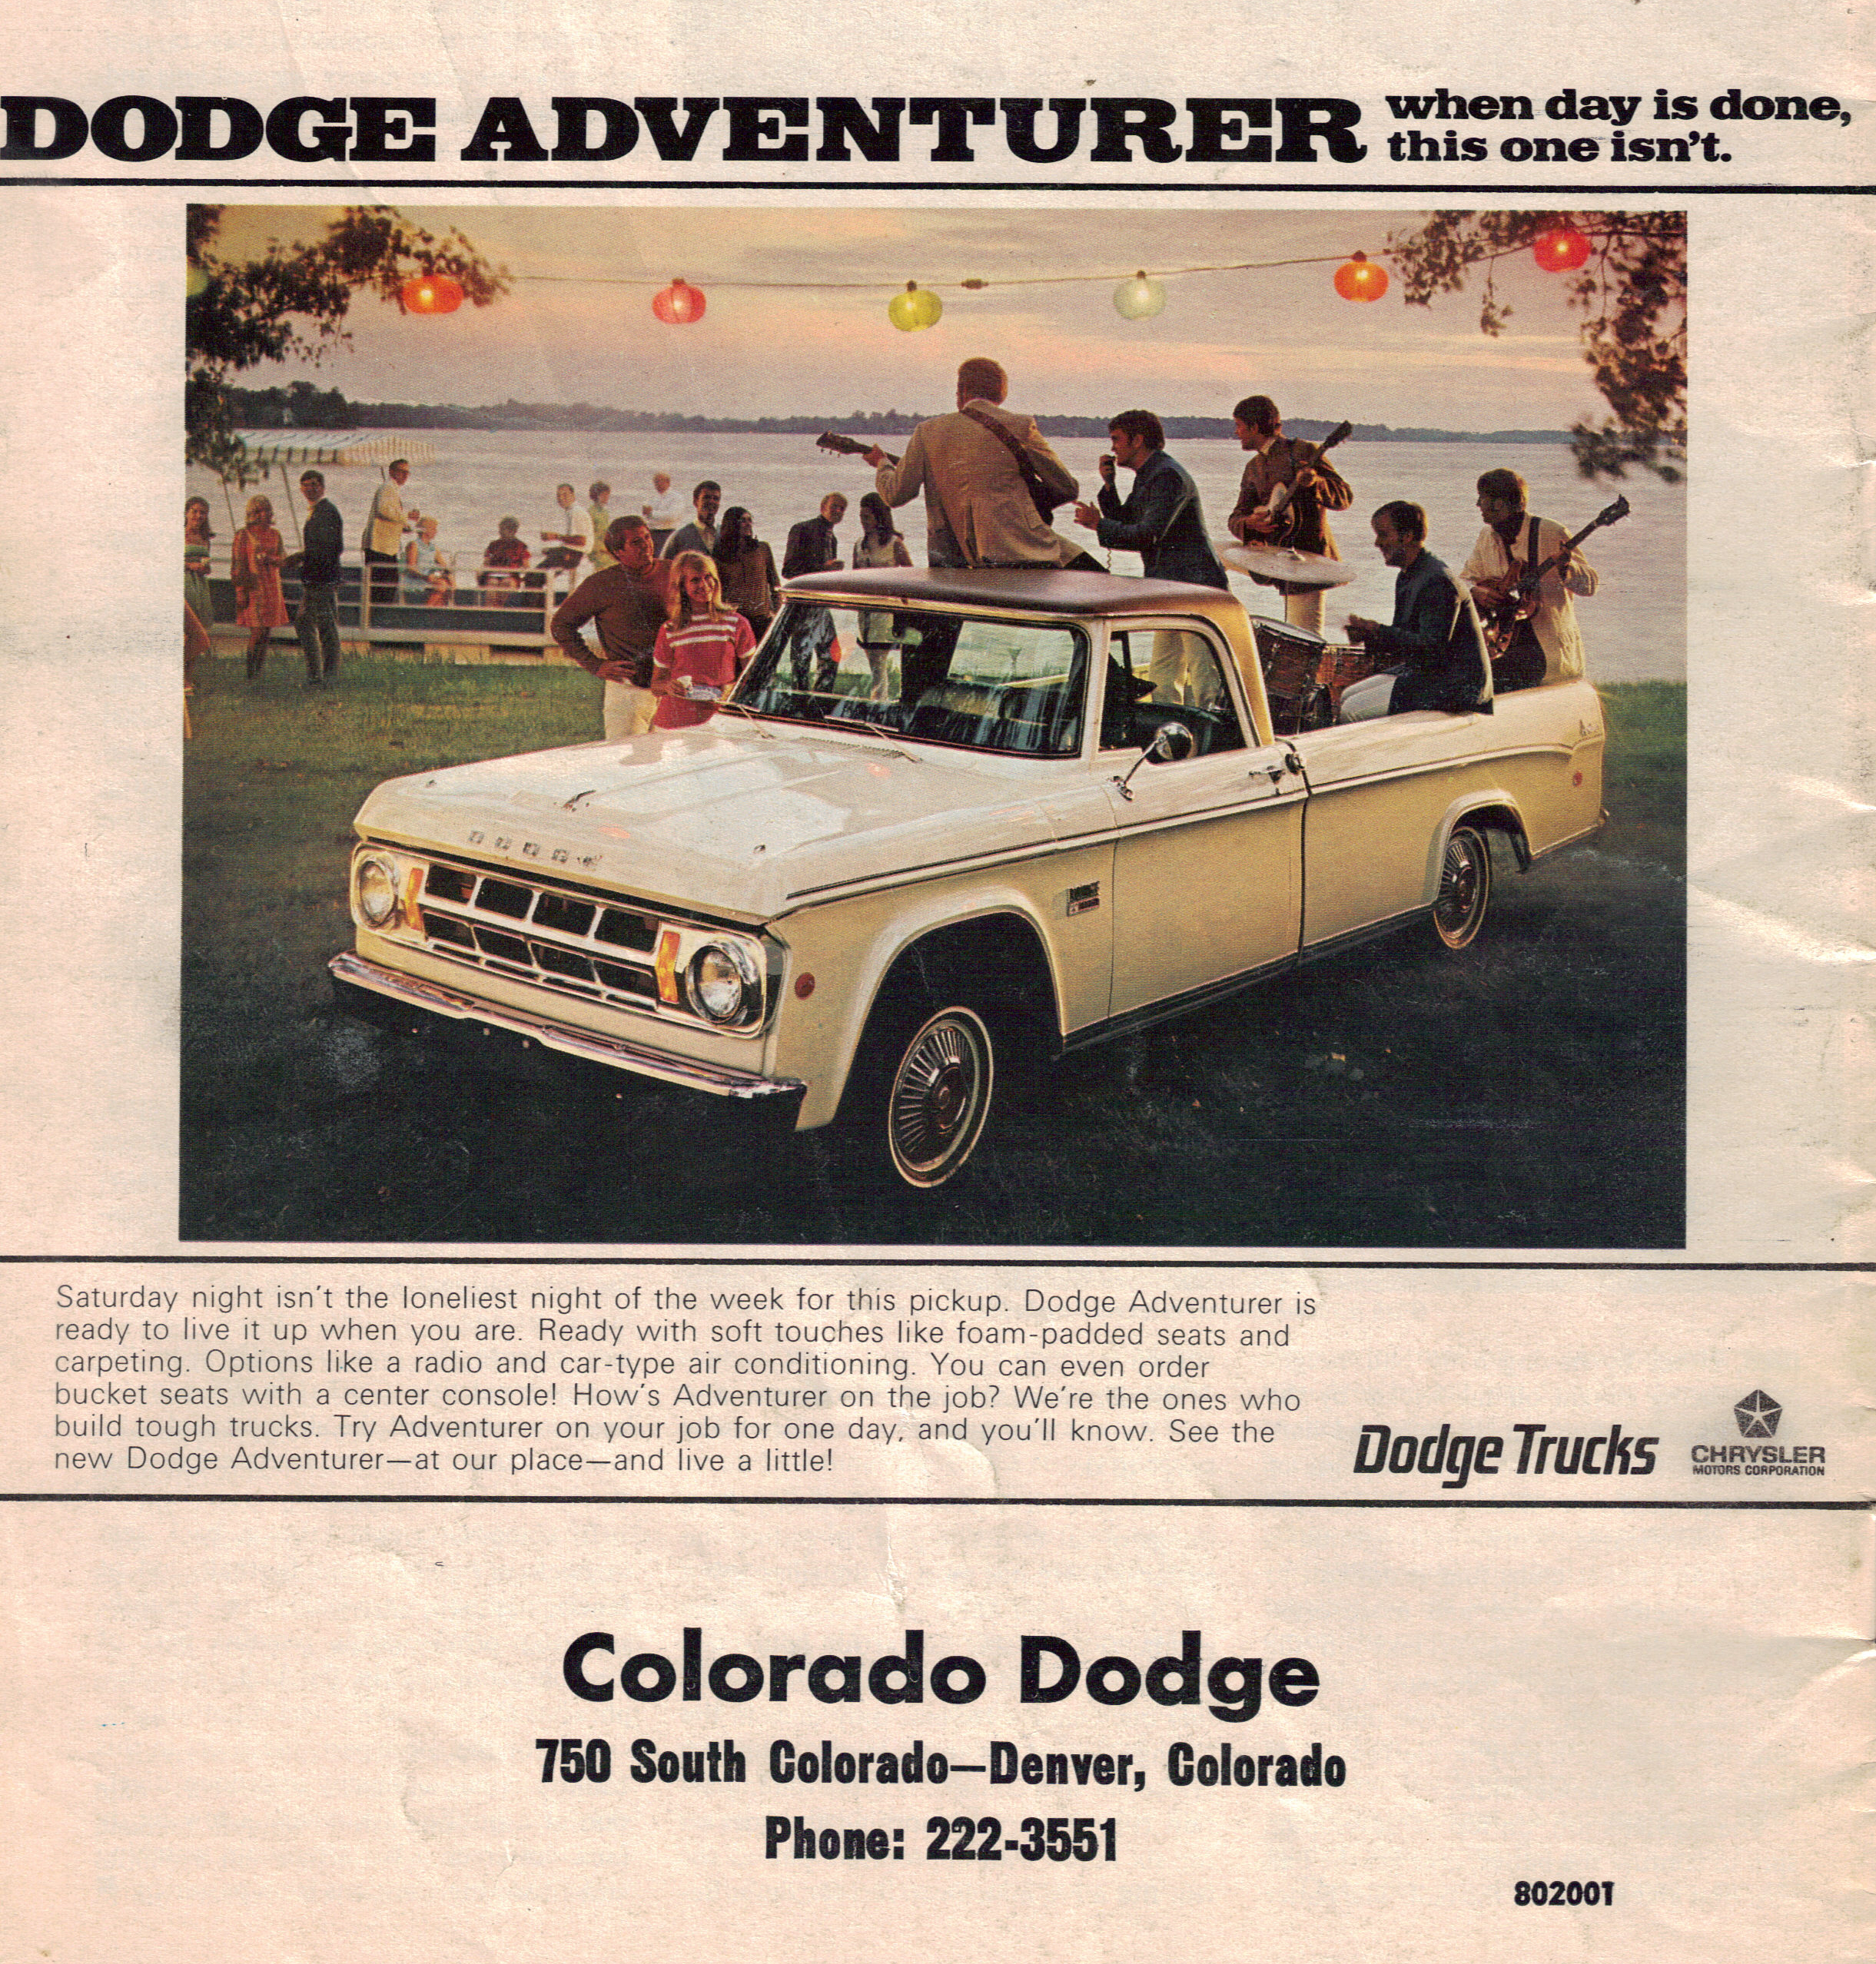 1969 Dodge Adventurer Pickup Truck | Flickr - Photo Sharing!